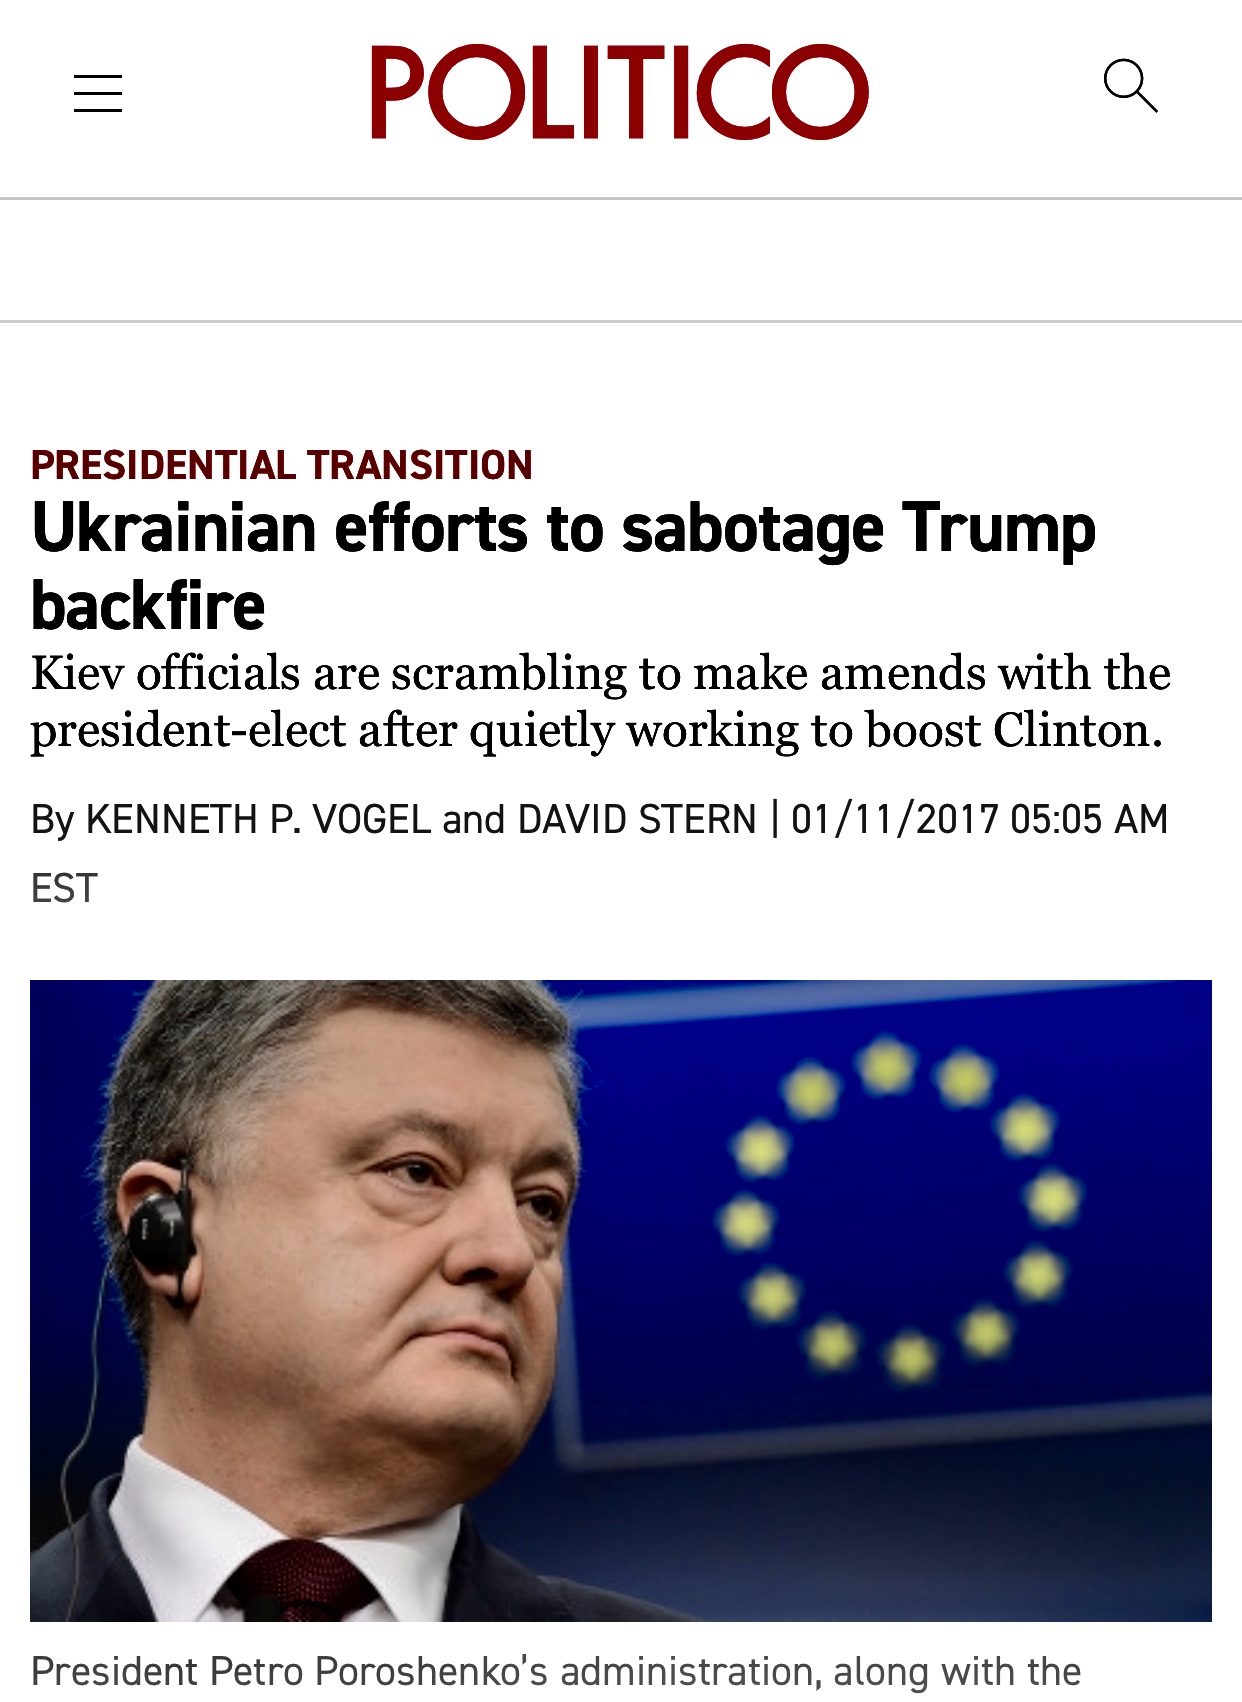 The Famous Politico Article Ukrainian Efforts to Sabotage Trump Backfire